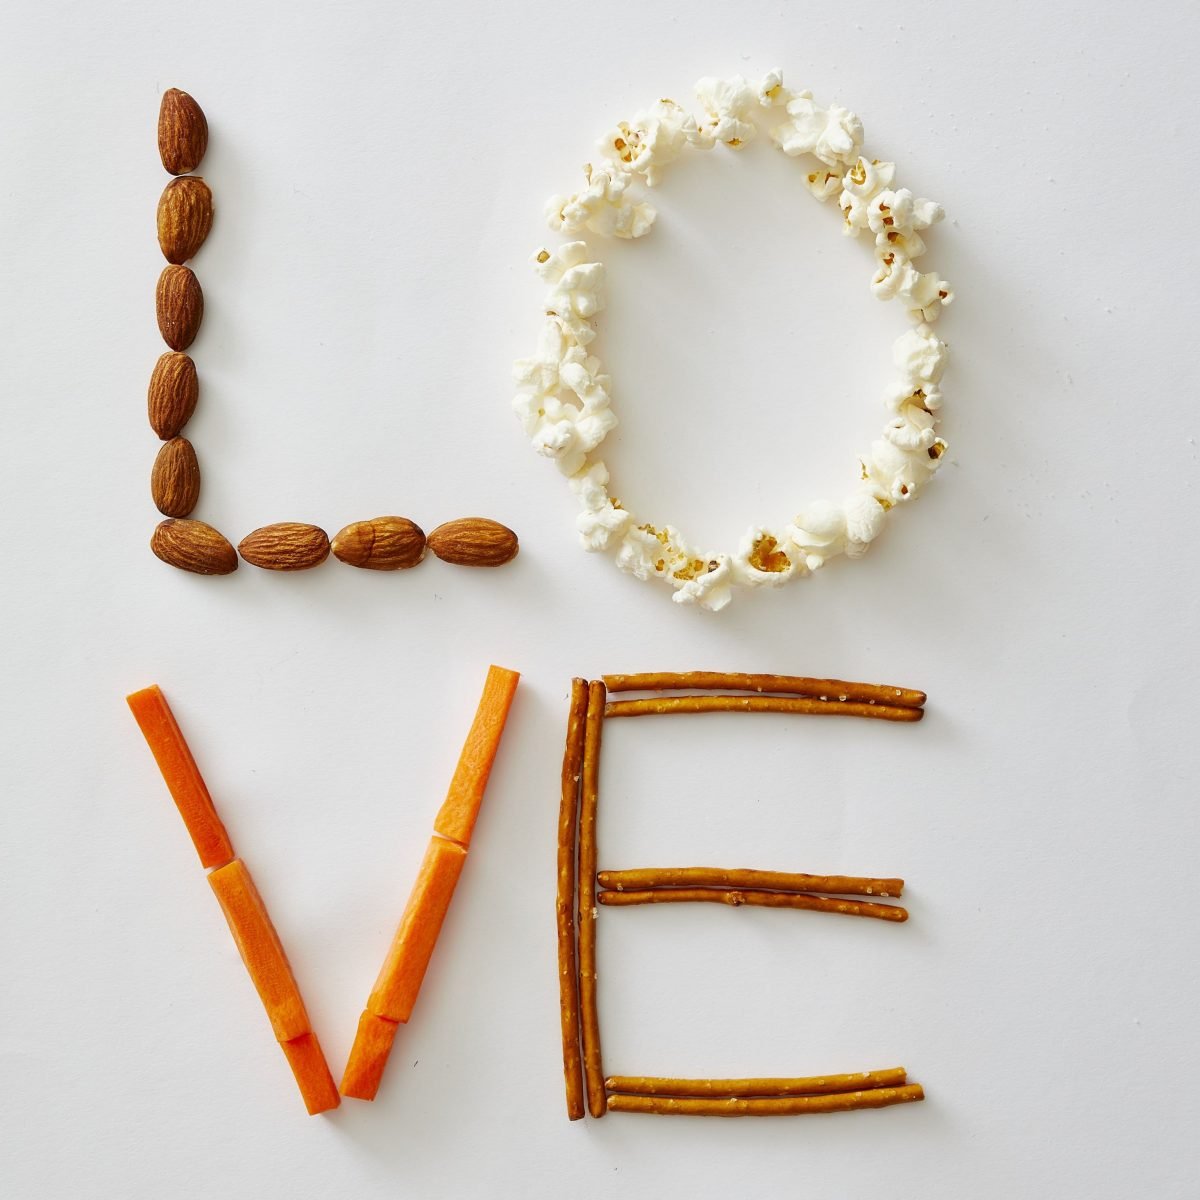 Darcy Miller Designs, L-O-V-E (savory), After school snack, Valentines, healthy treat, pretzels, carrots, popcorn, almonds, nuts, easy valentine, Darcy Miller, DIY